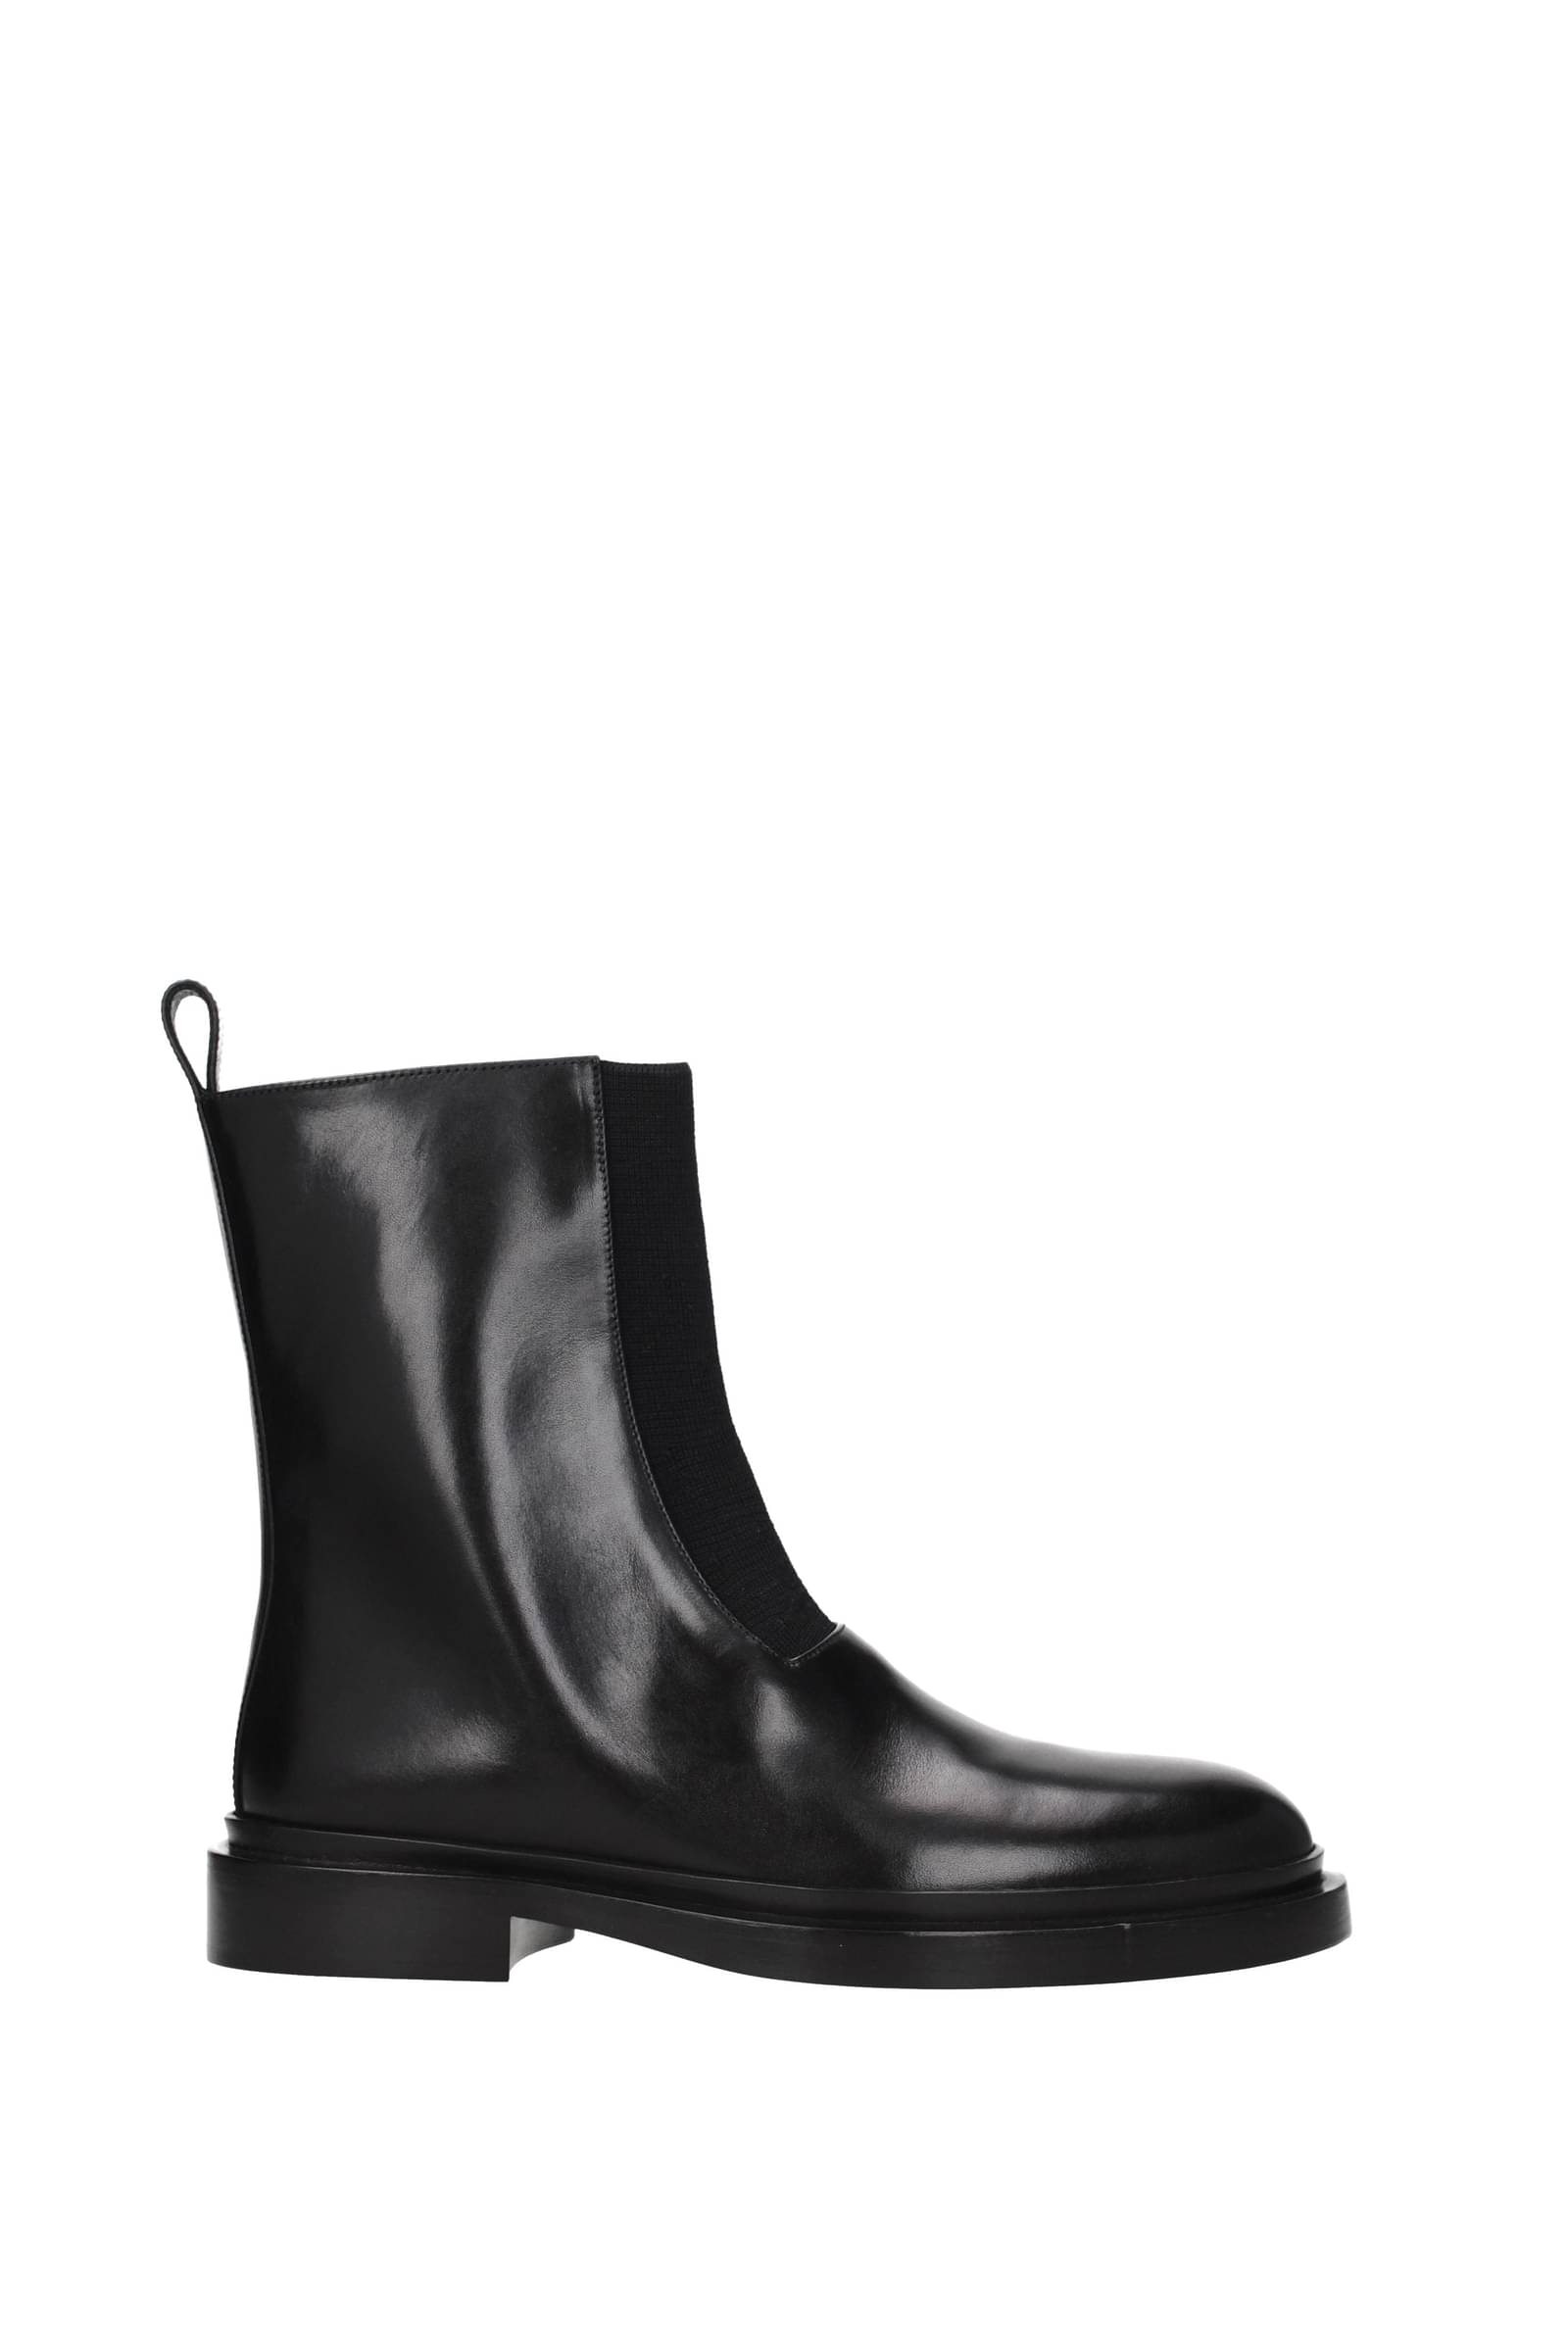 Jil Sander Ankle boots Women J15WU0020PS361001 Leather Black 630€